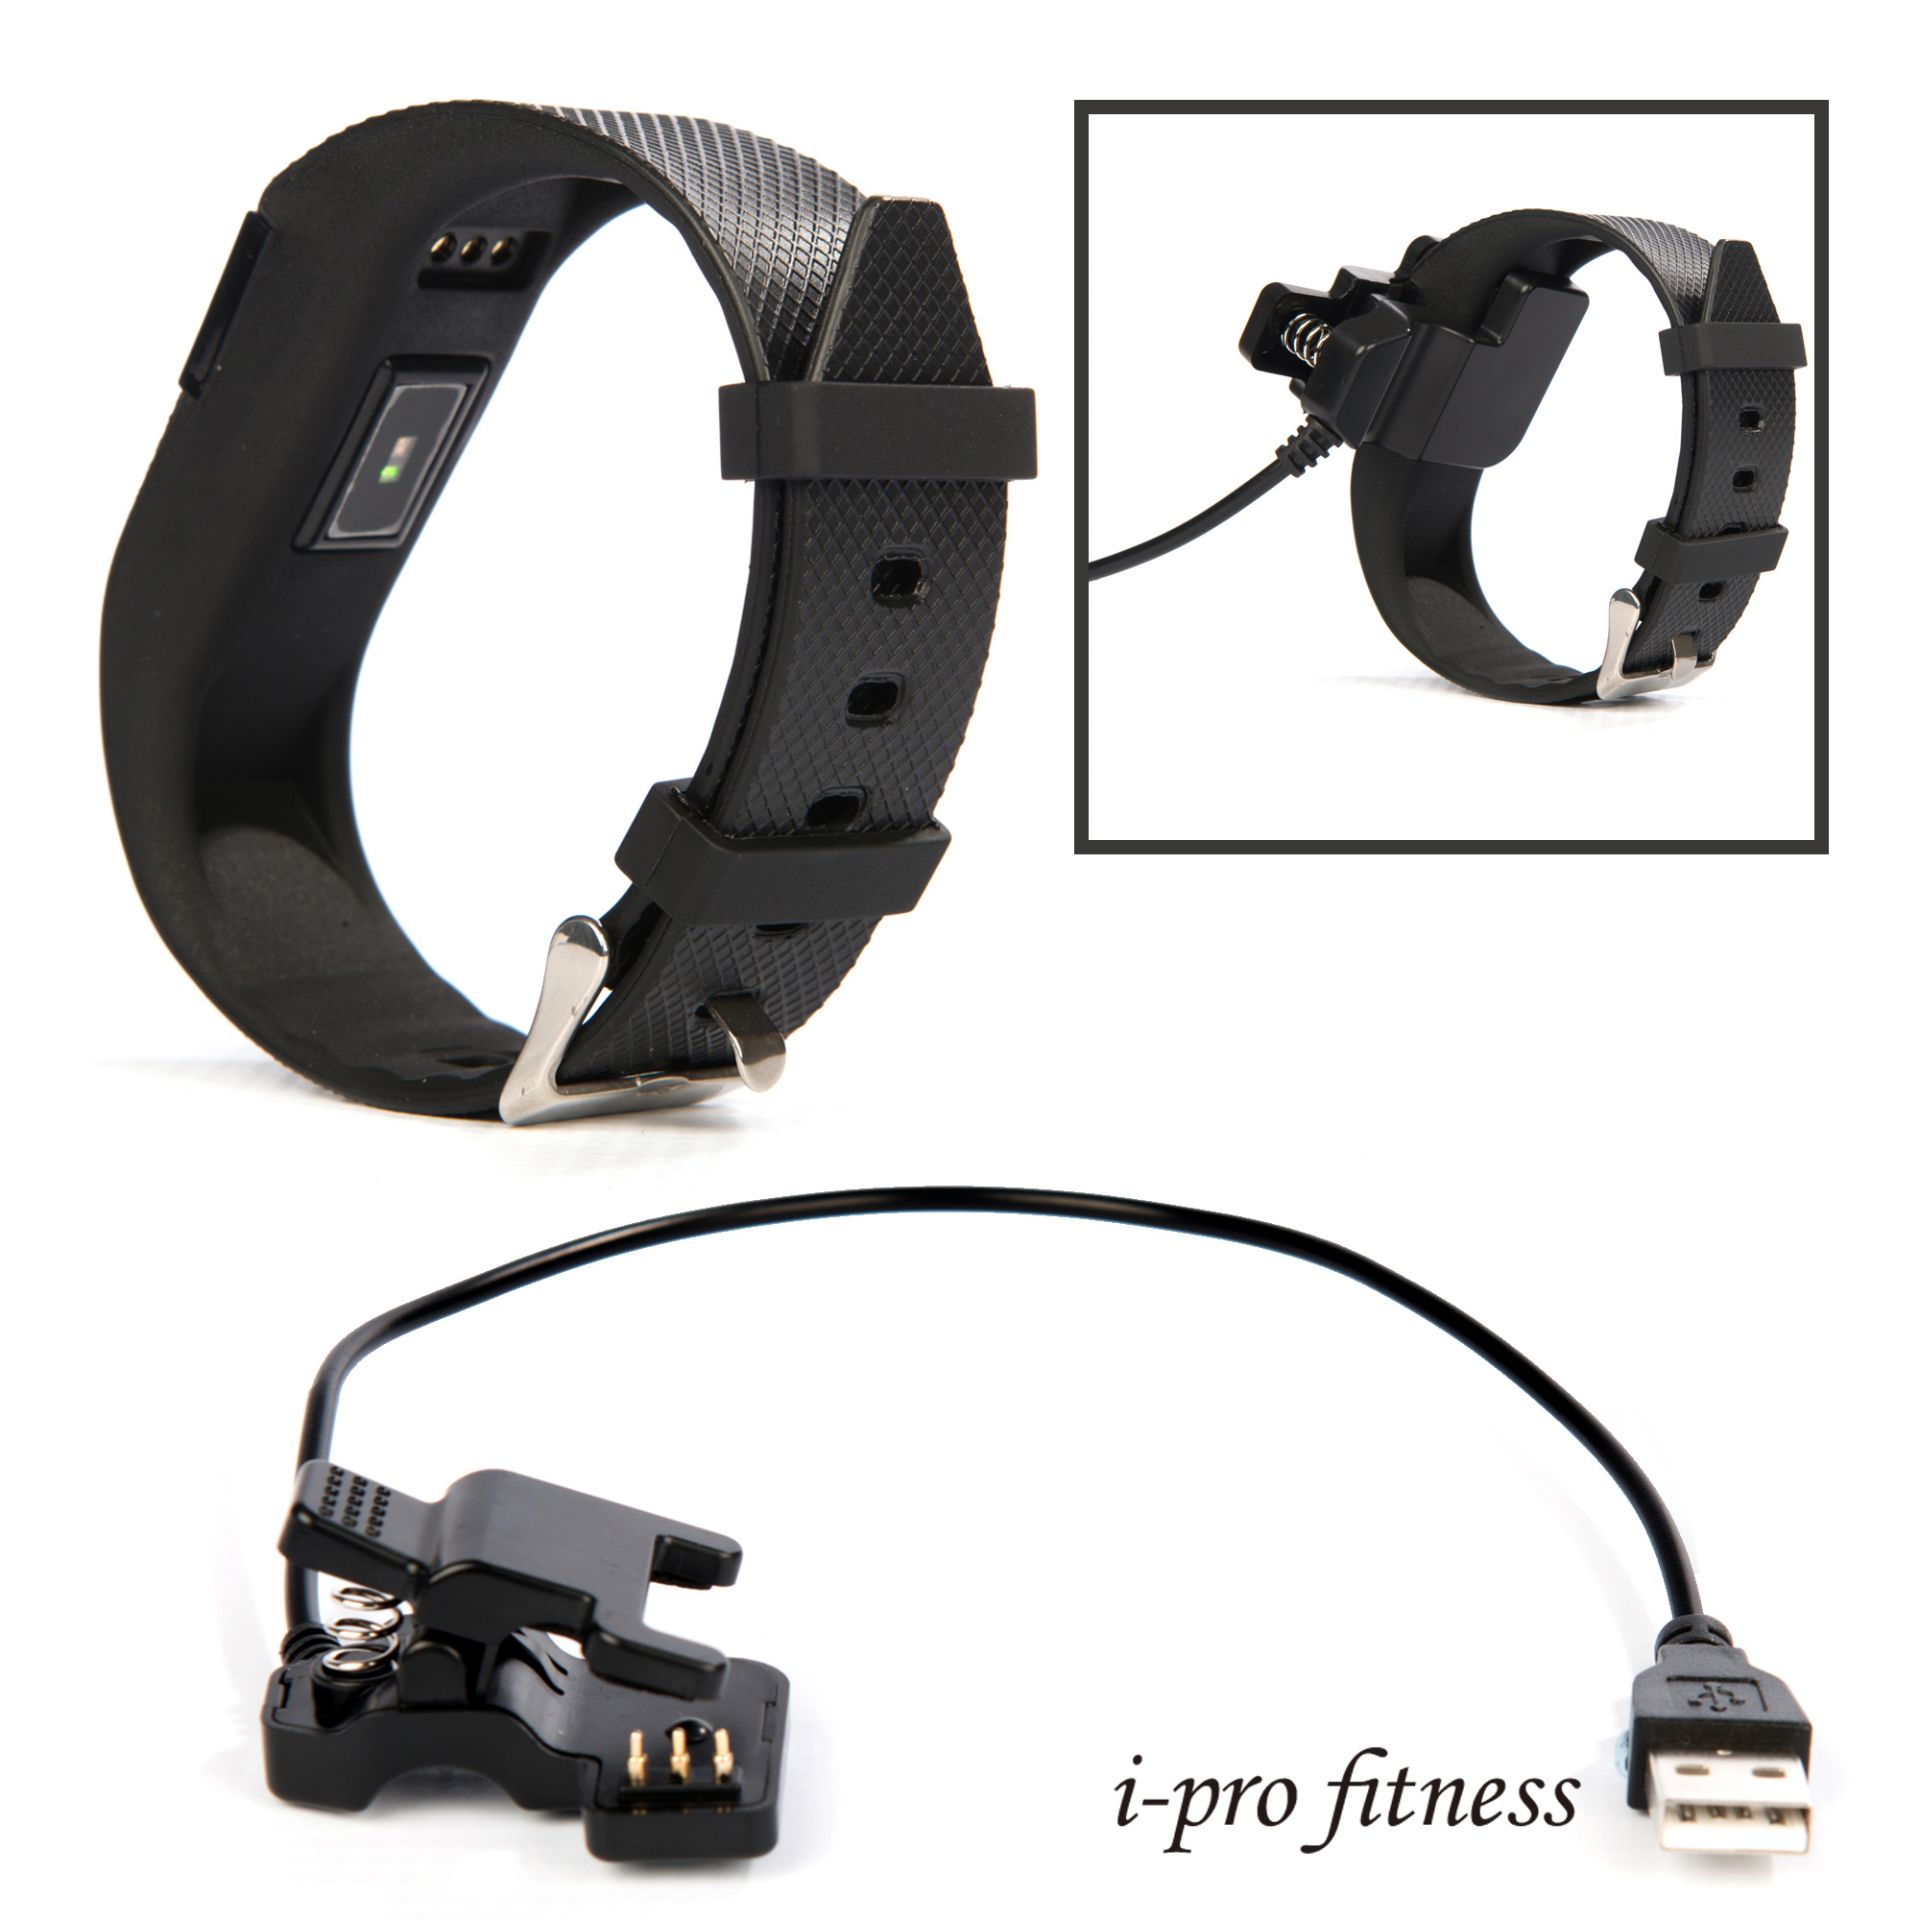 10x Fitness Tracker i-pro fitness, Bluetooth 4.0 Sports Smart Bracelet. - Image 6 of 8